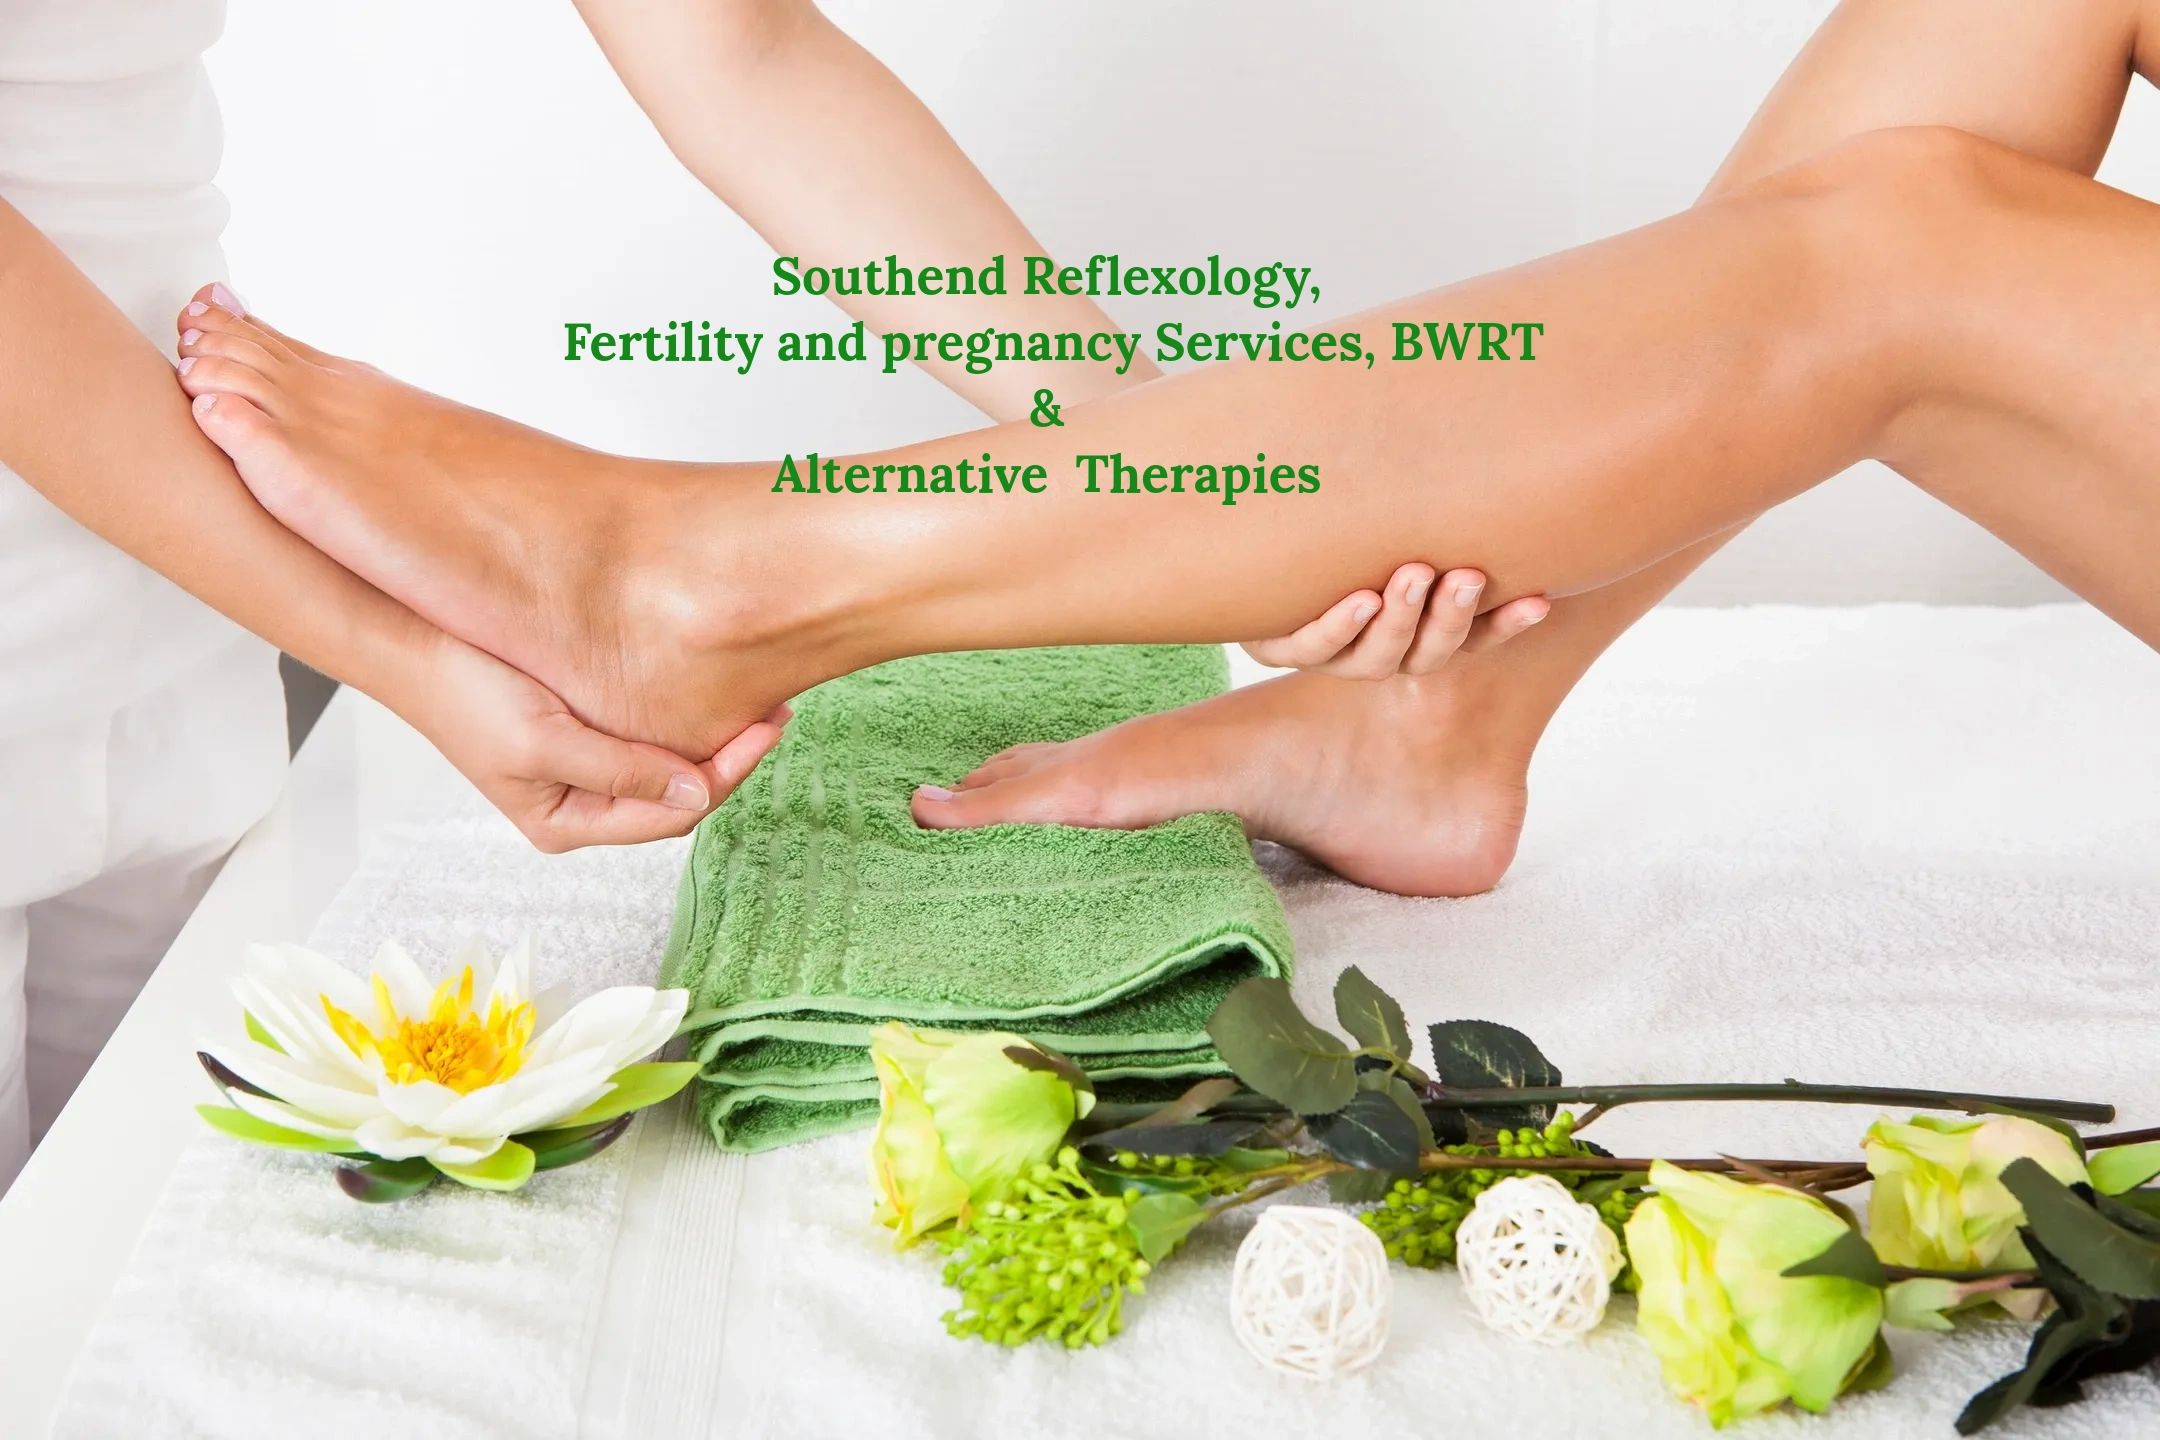 Southend Reflexology, Fertility and Pregnancy services, BWRT & Alternative Therapies.